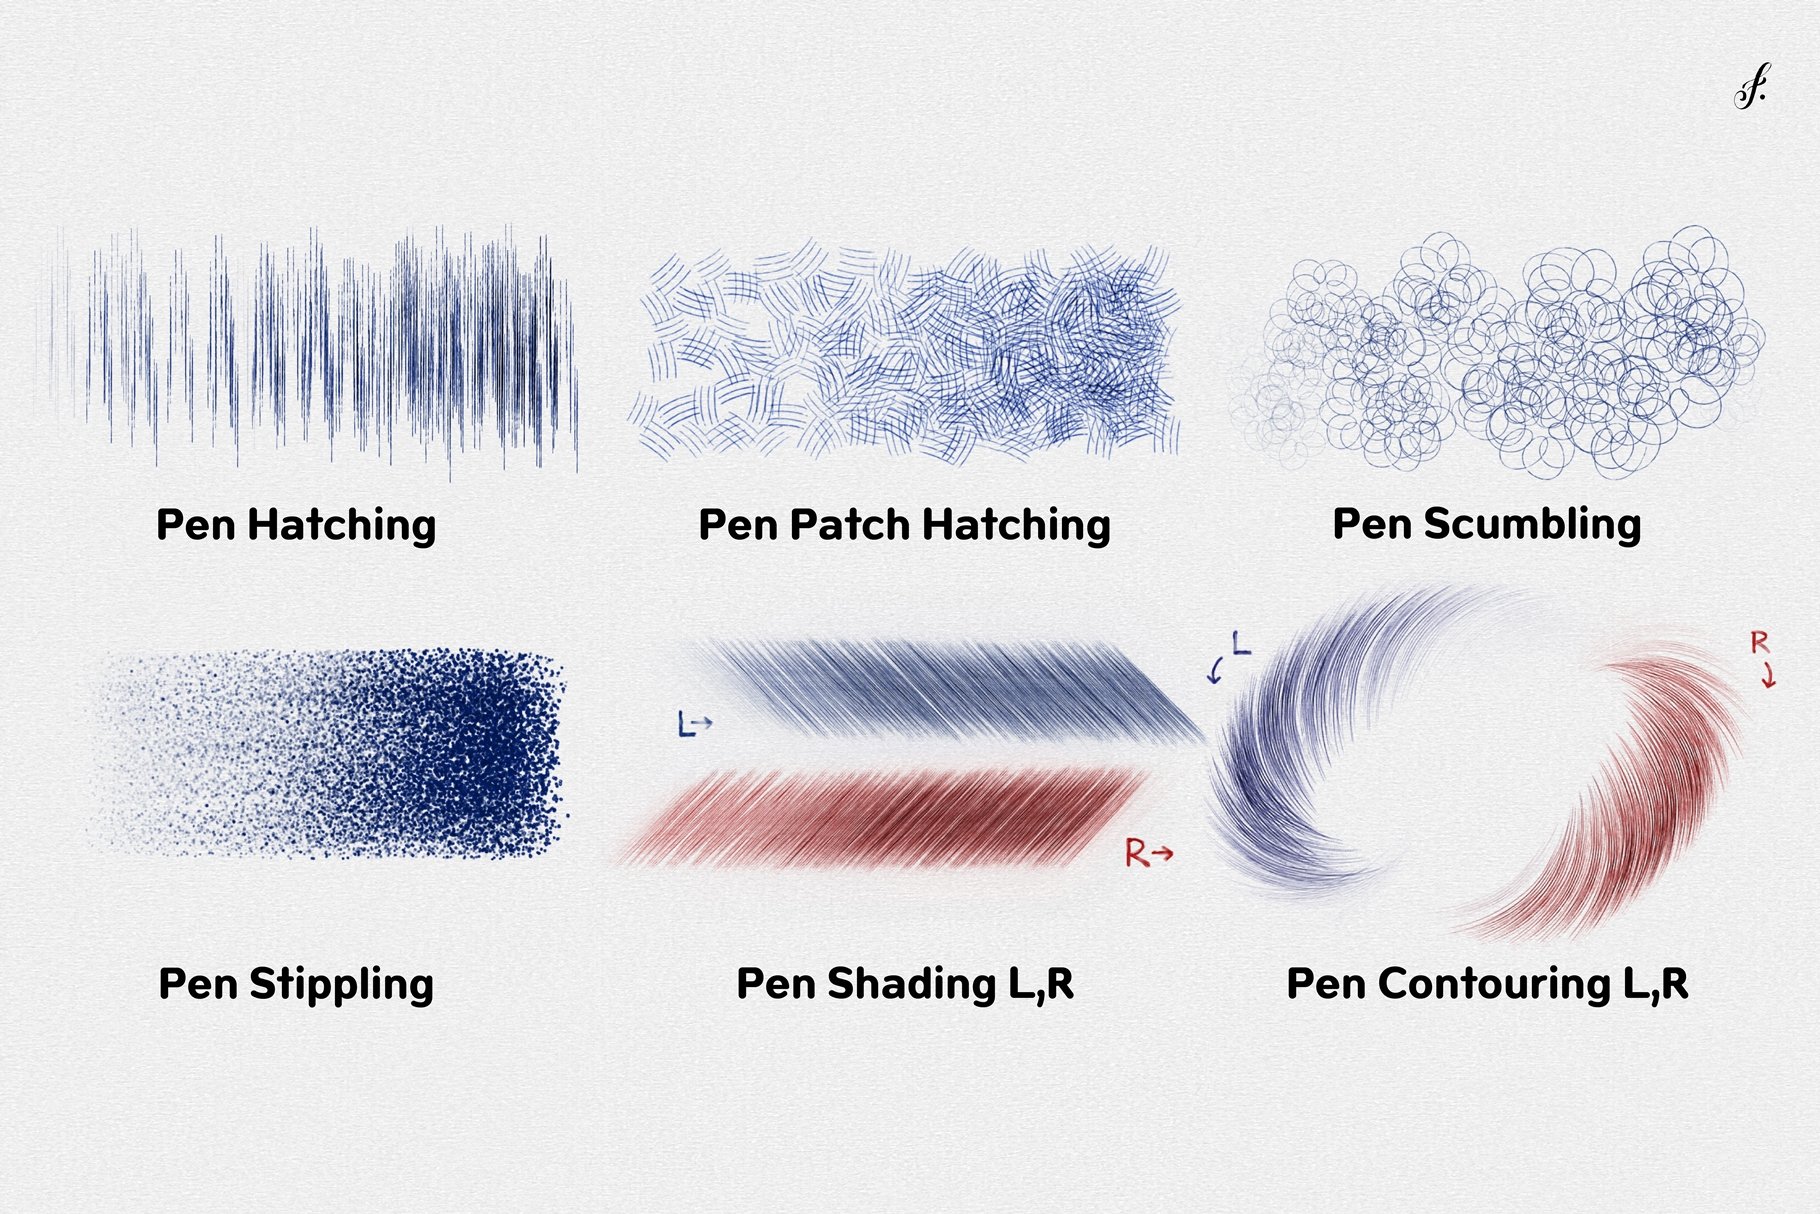 Procreate Brush Pens - Design Cuts